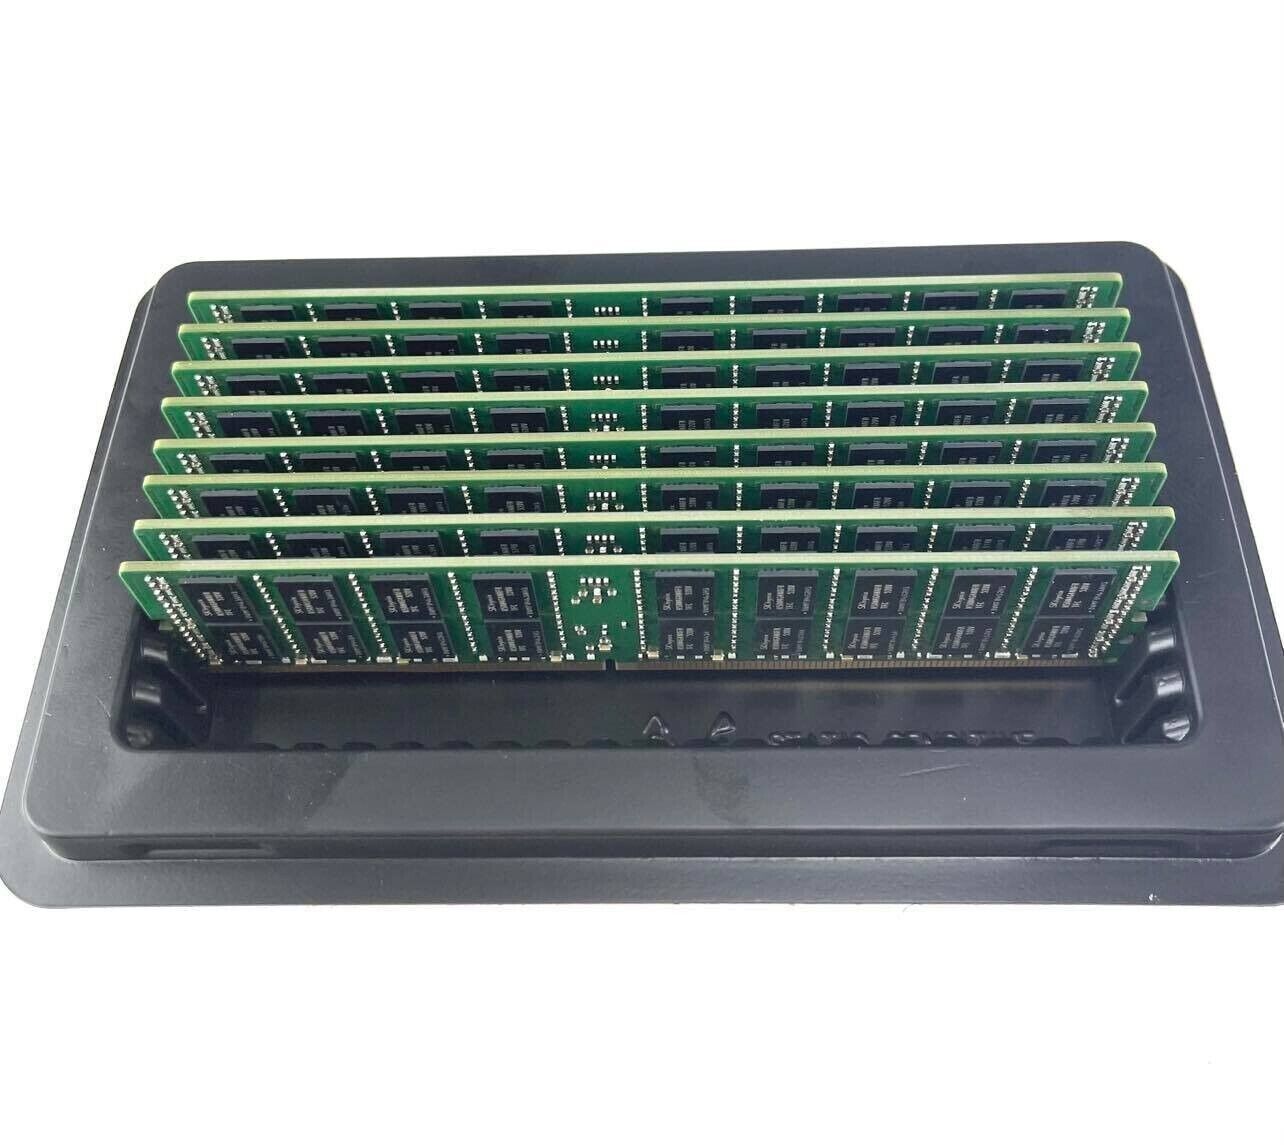 Hynix 256gb kit (8pcs 32gb) DDR4-2133p for DELL POWEREDGE M430 T430 R530 R730 R7